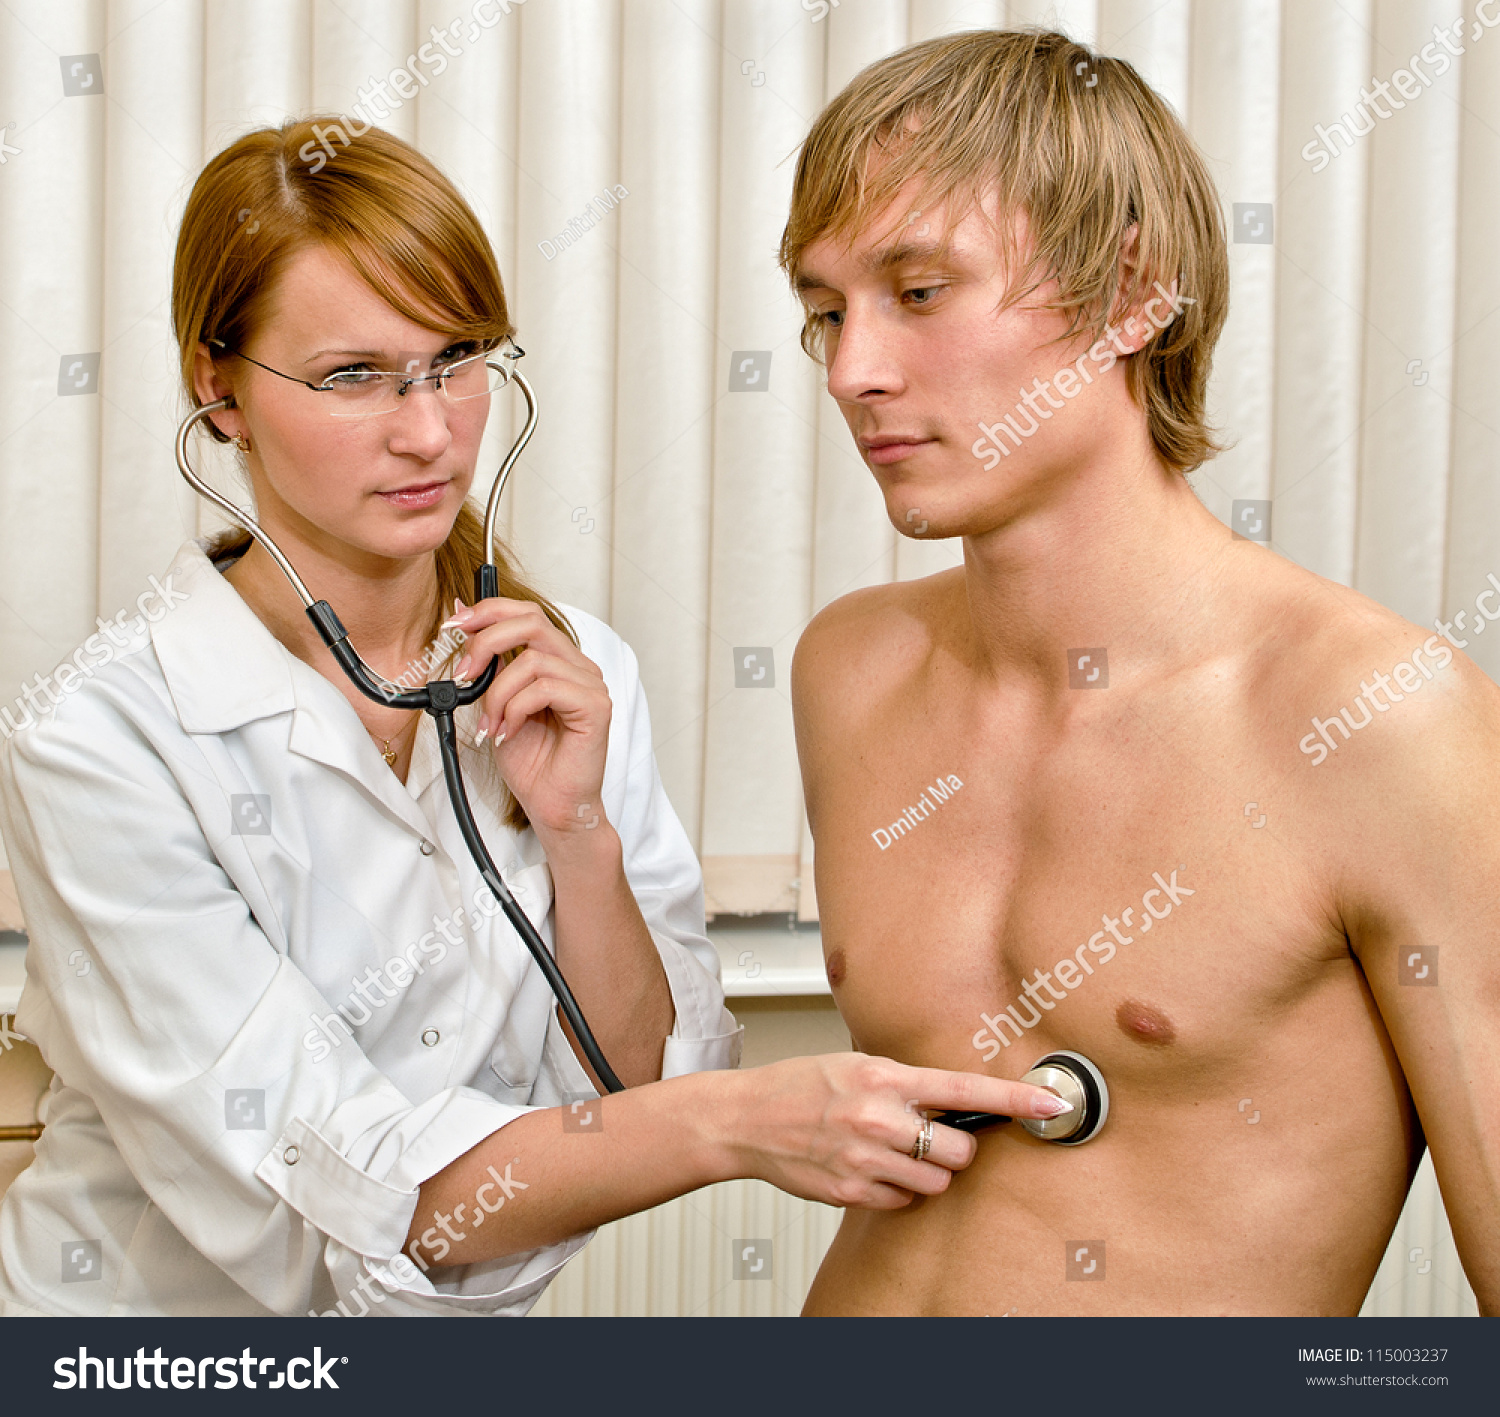 Nude Female Doctor 61